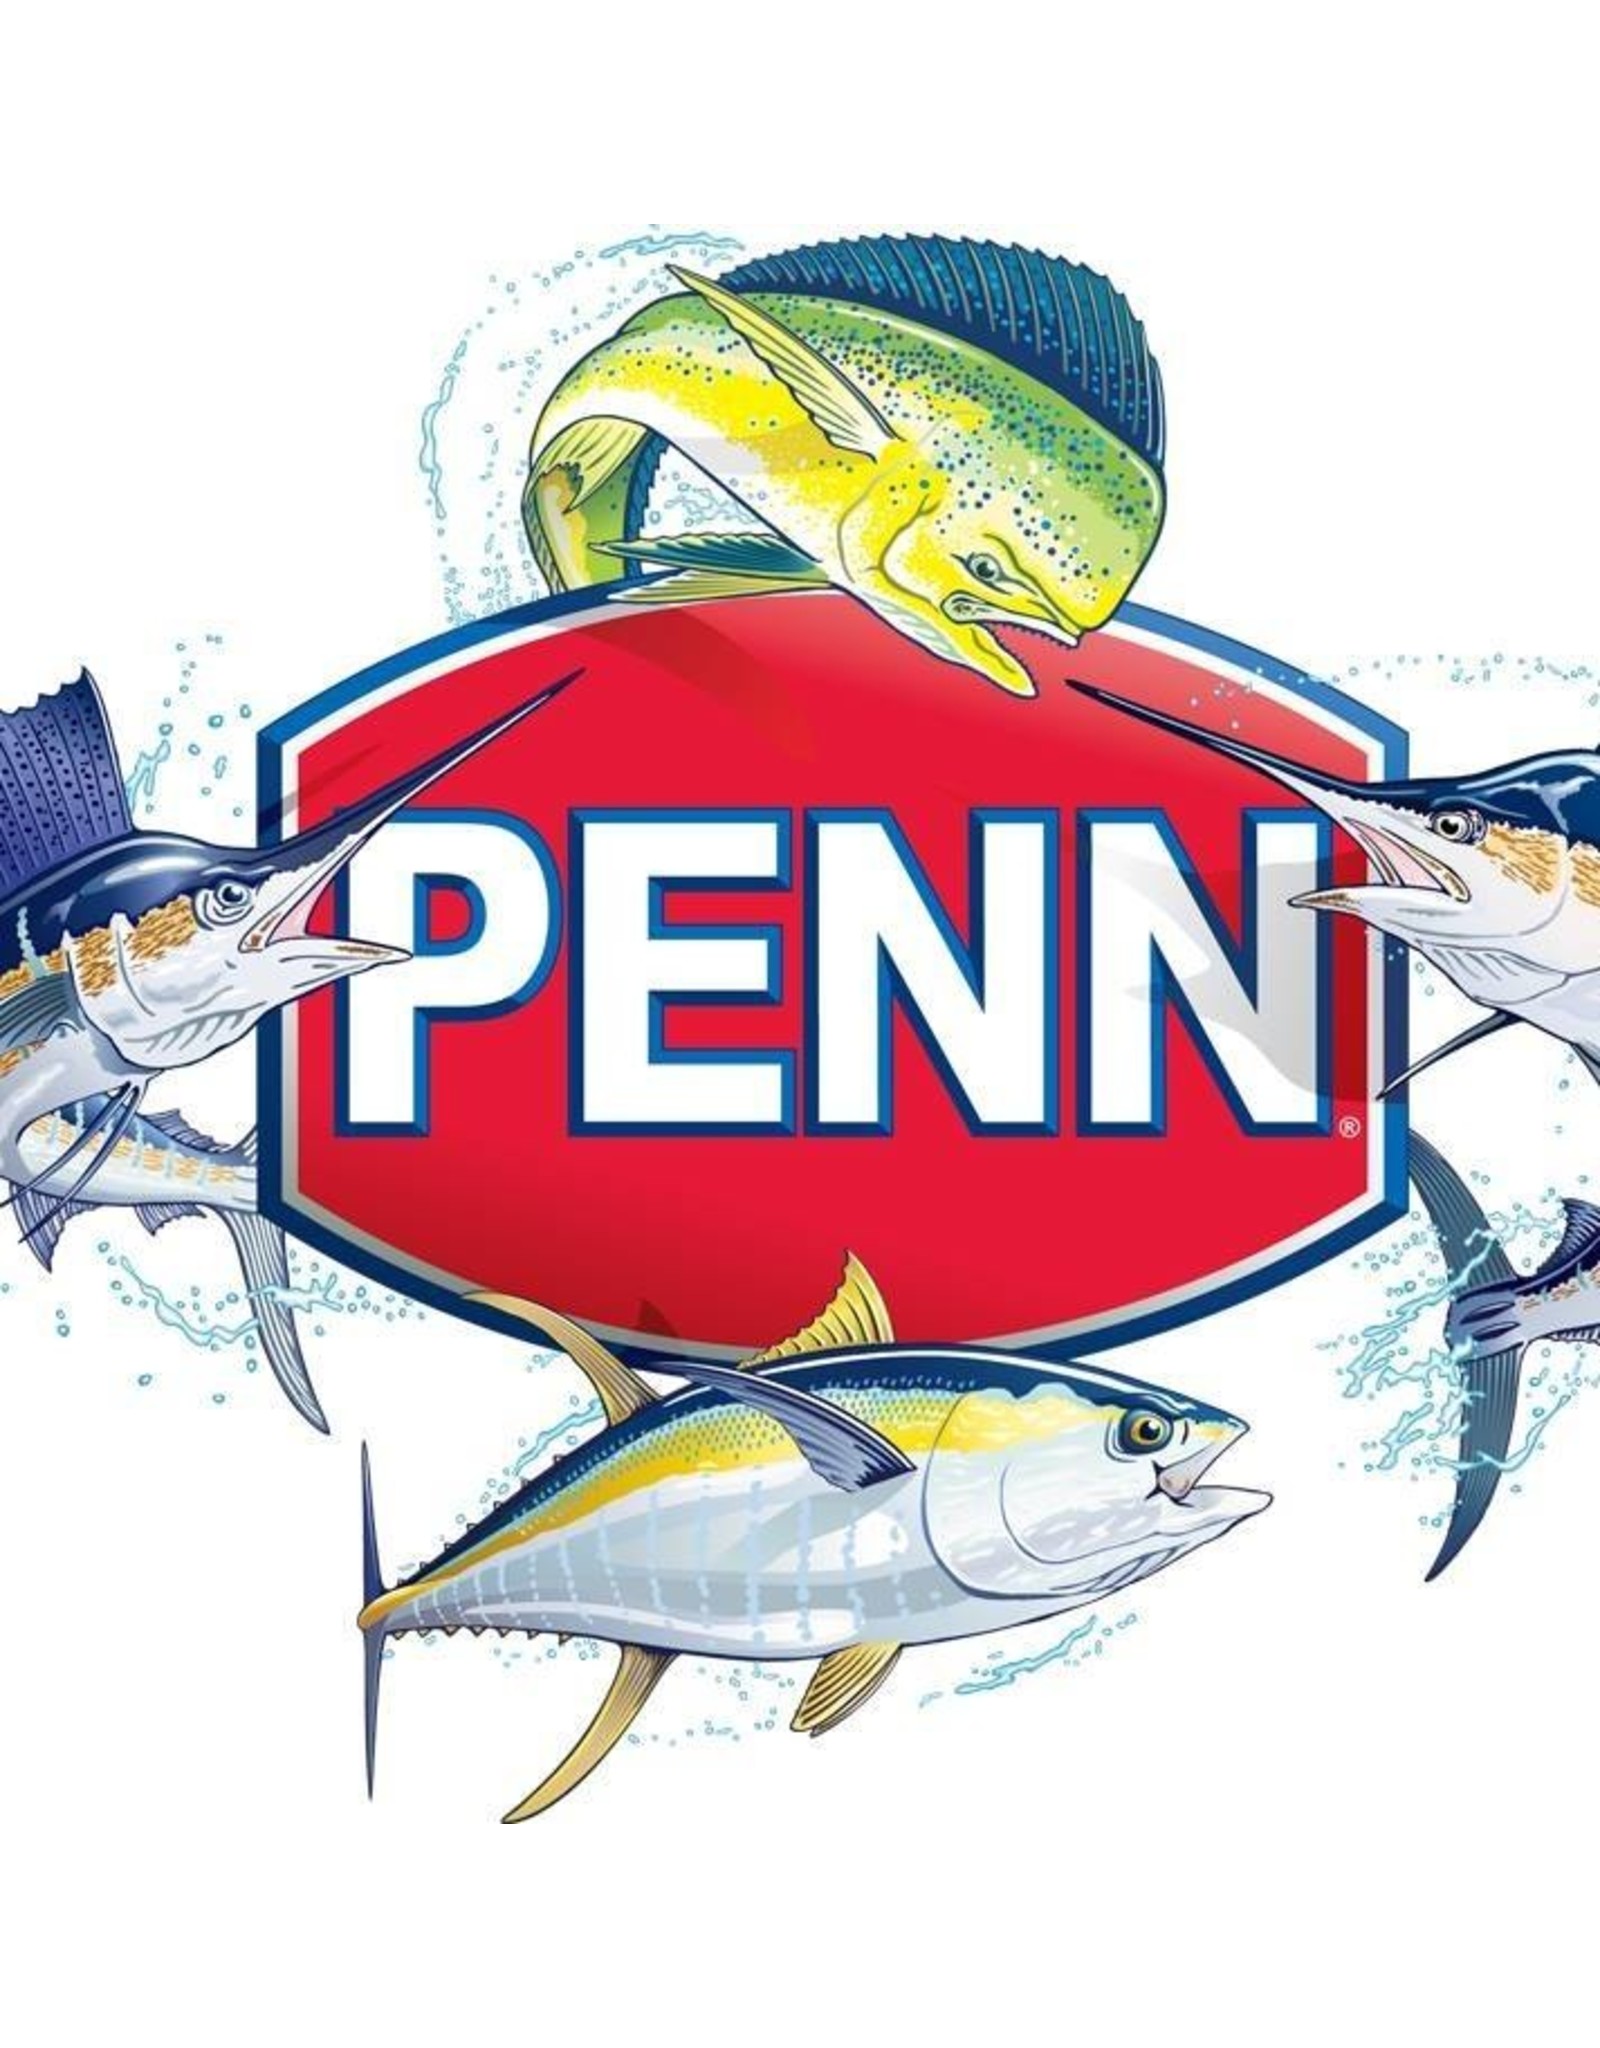 Penn 8-965  STAR TENSION WASHER